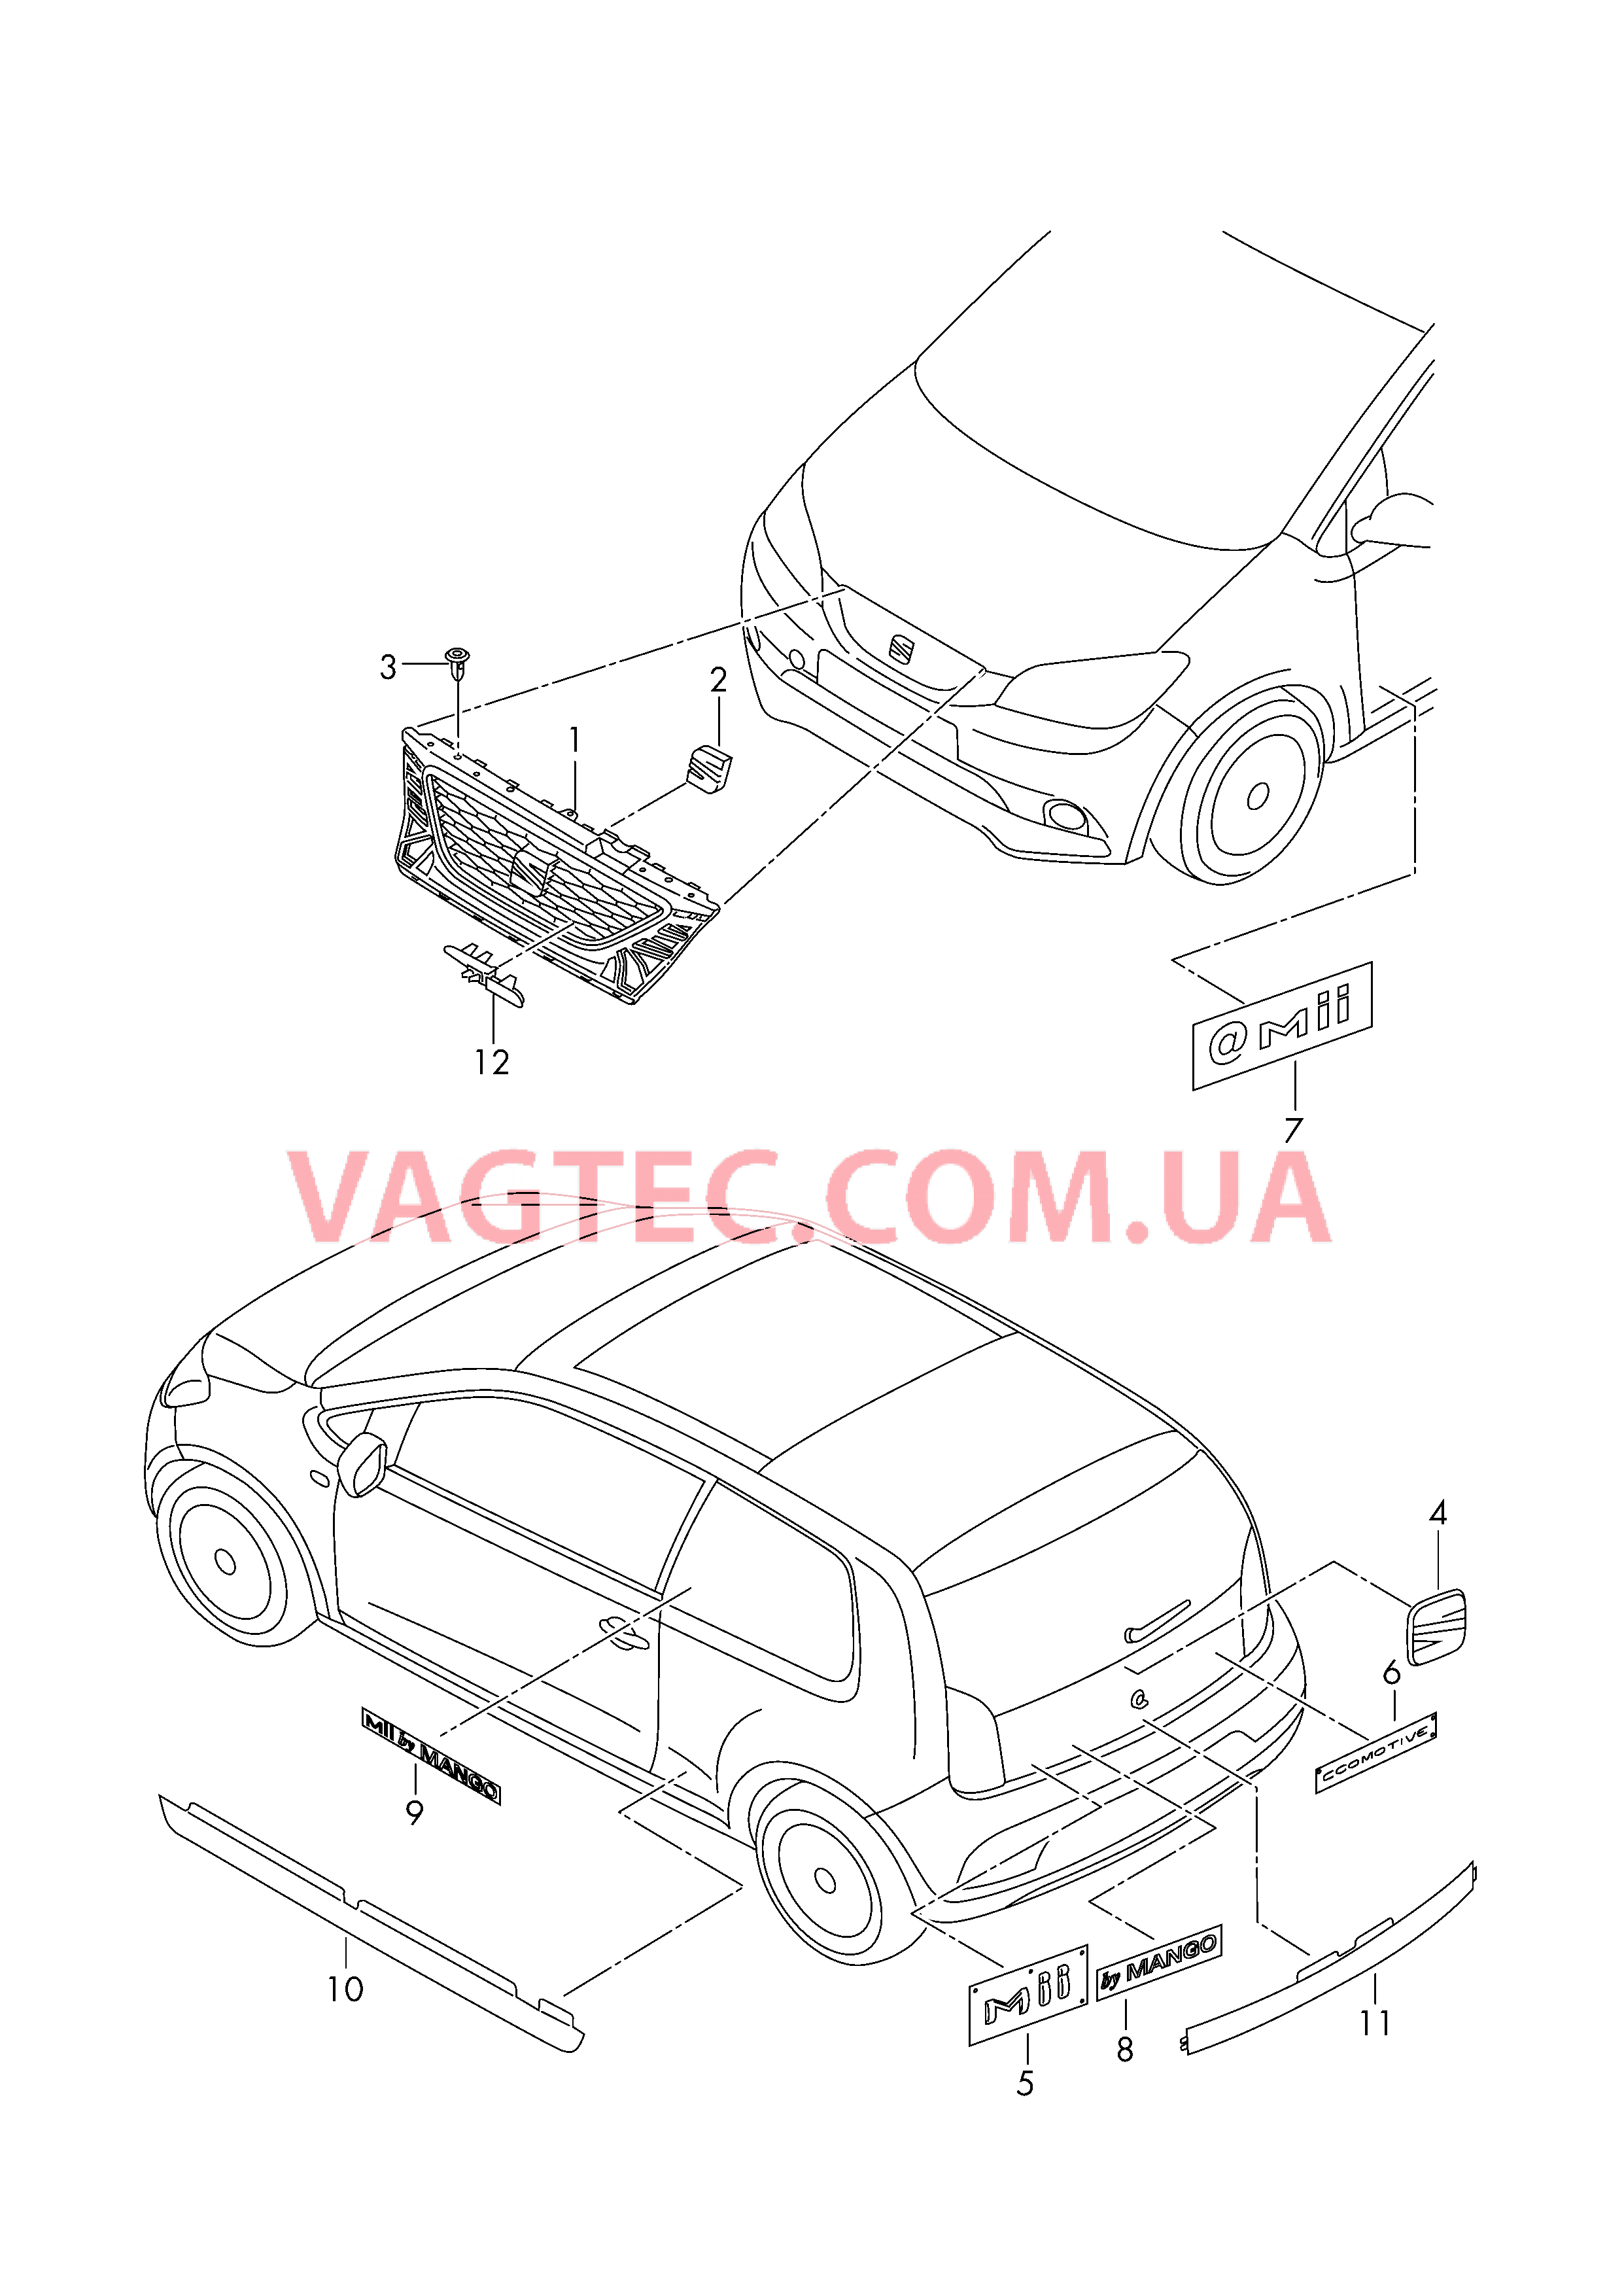 Решётка радиатора Надписи Брелок  для SEAT MI 2015